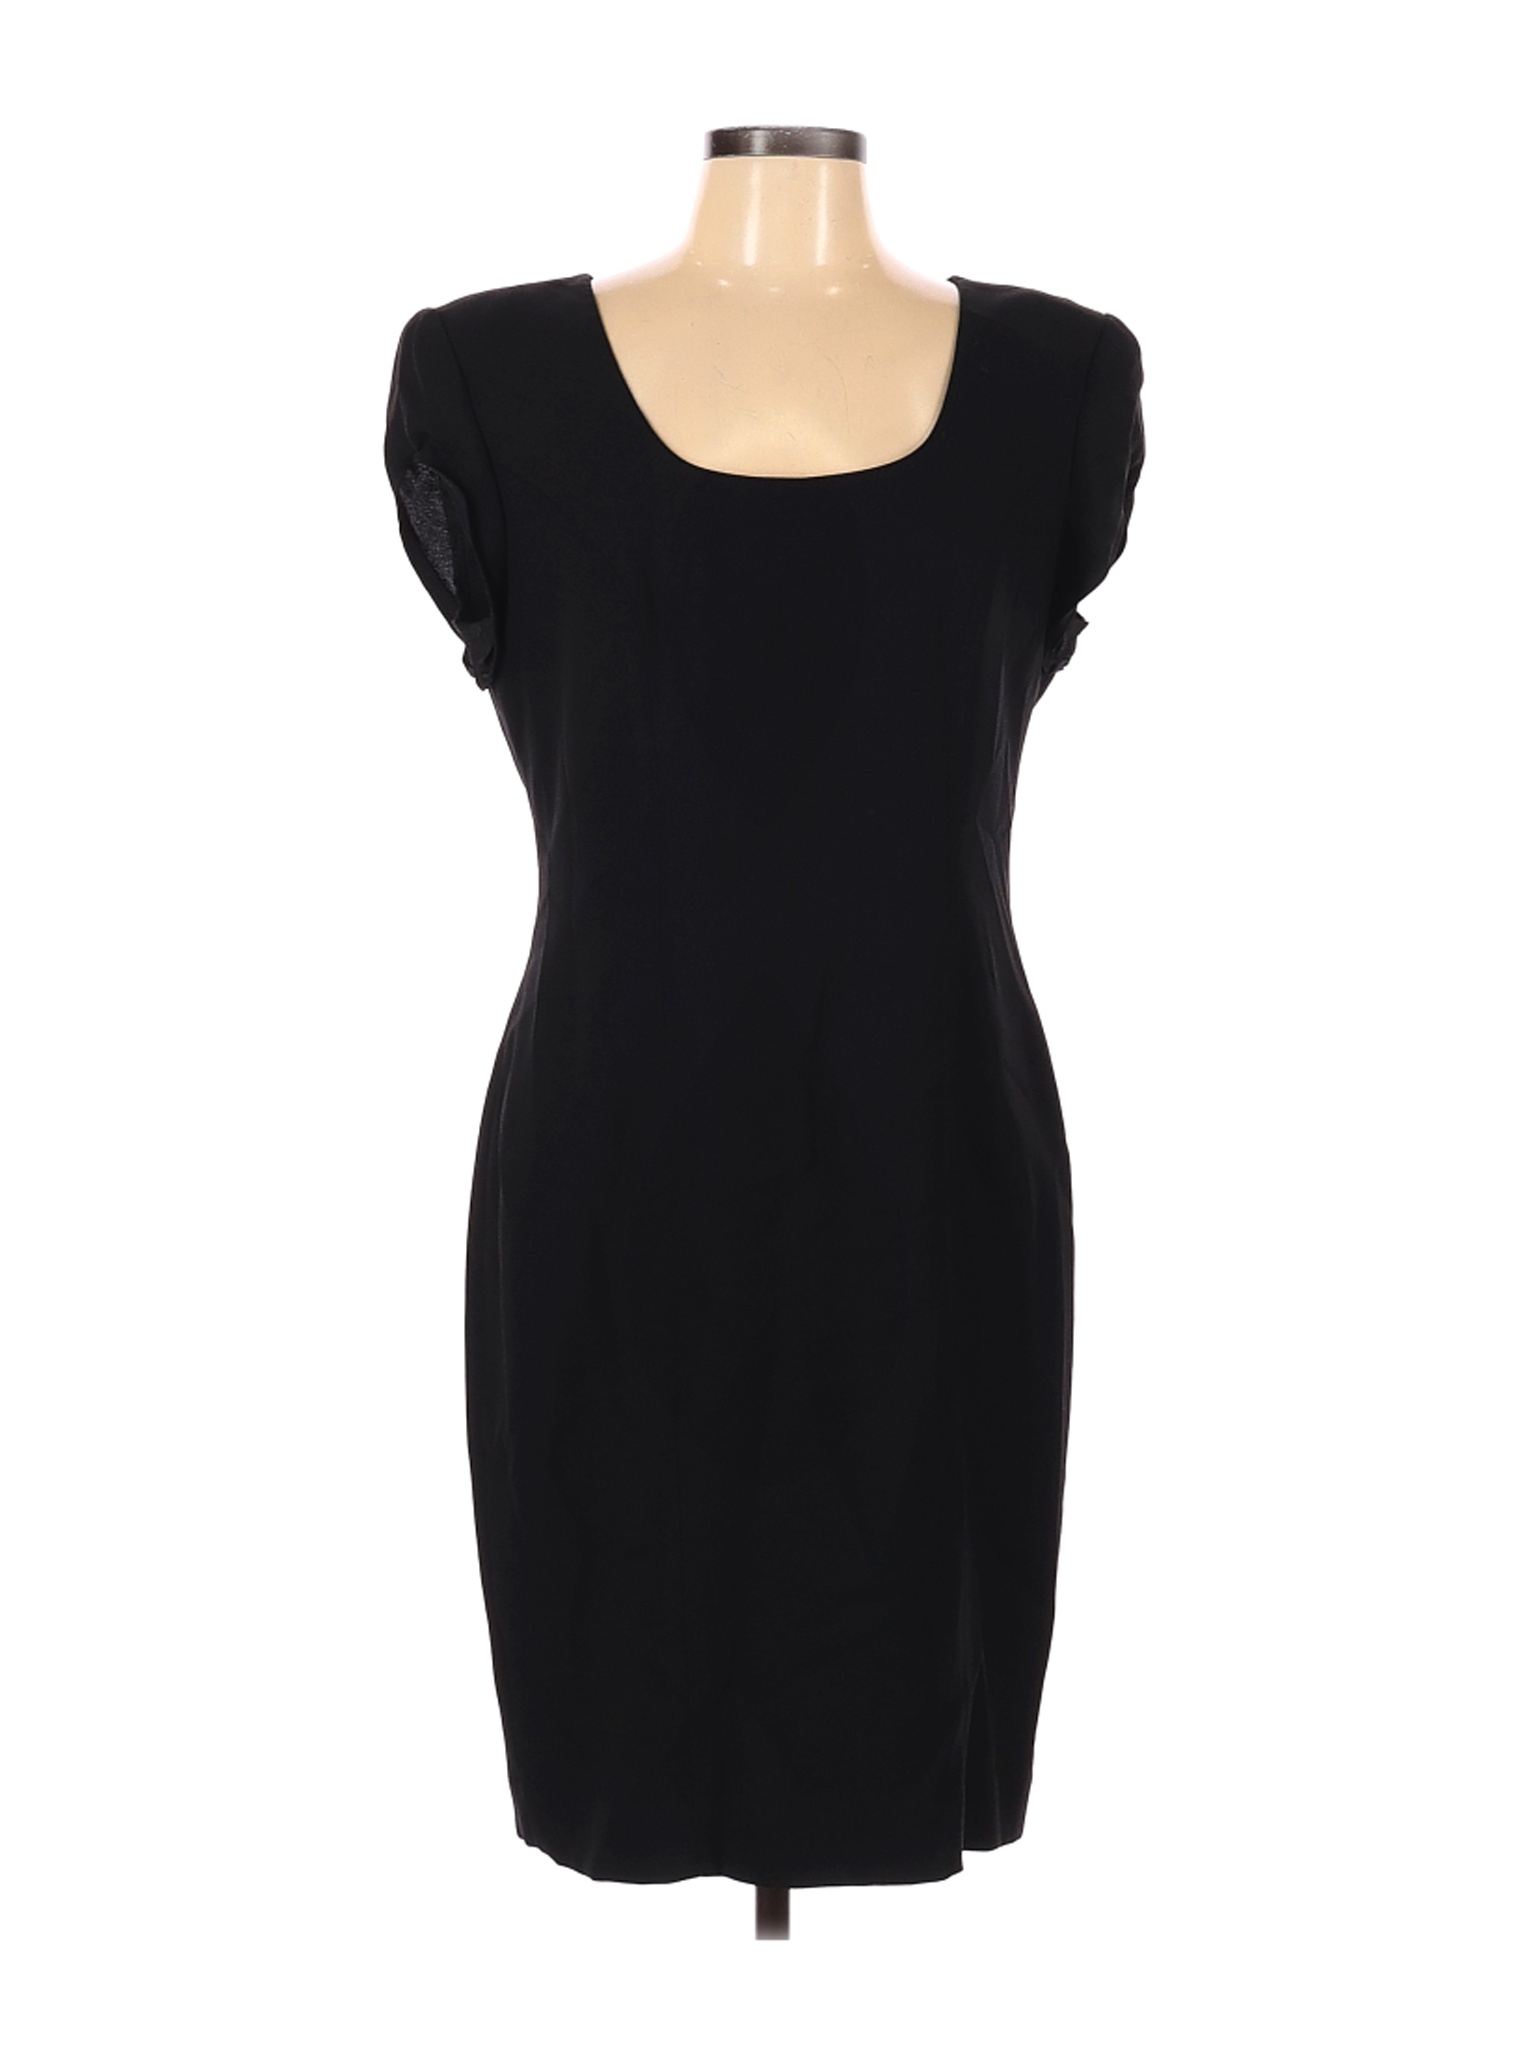 Liz Claiborne Women Black Cocktail Dress 12 Ebay 